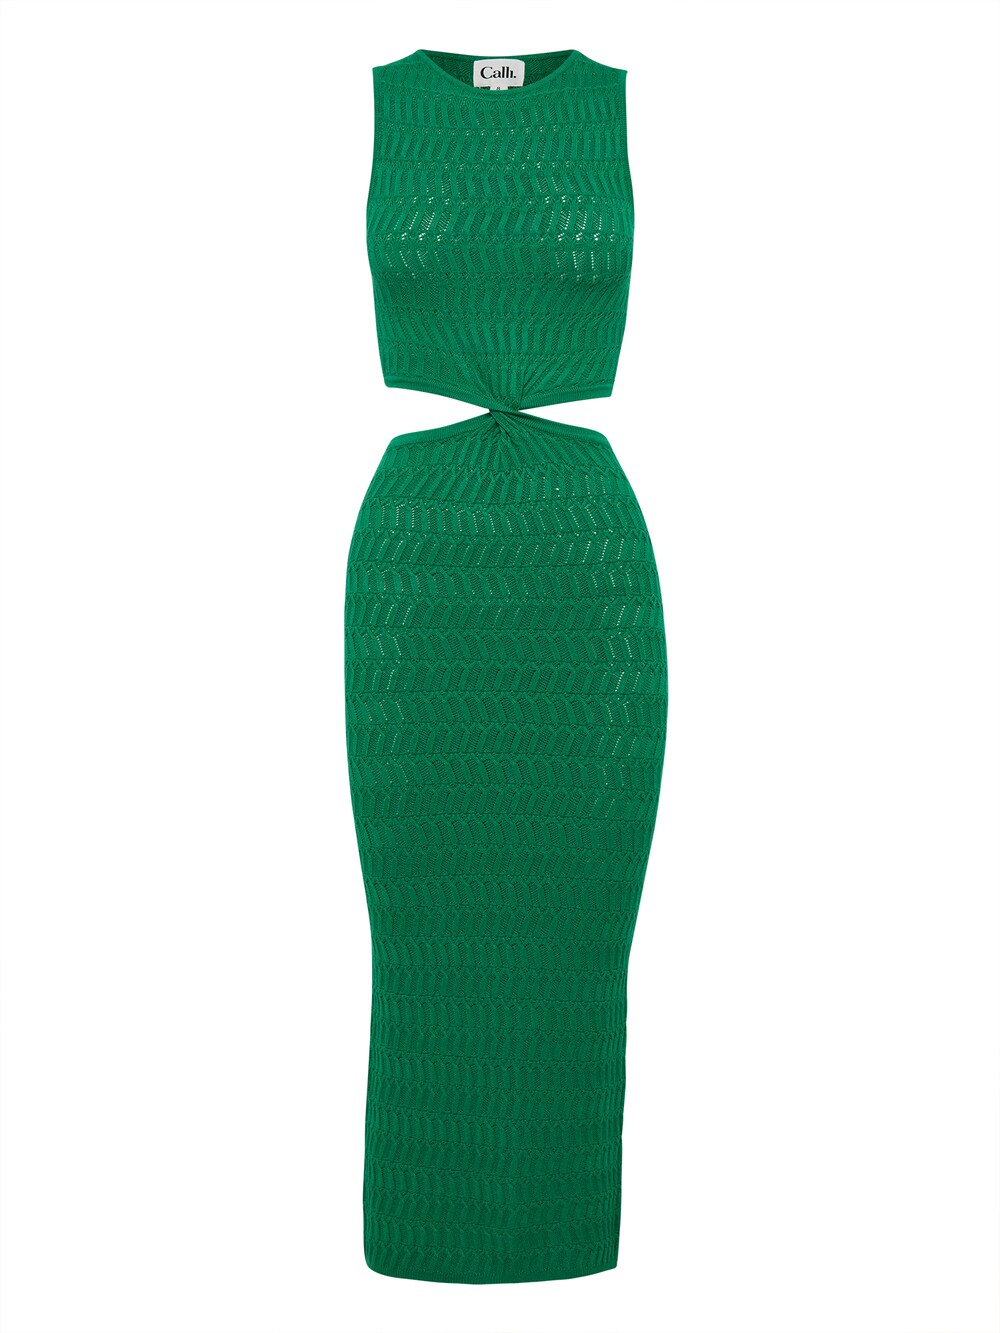 Вязанное платье Calli SHARNIE, зеленый